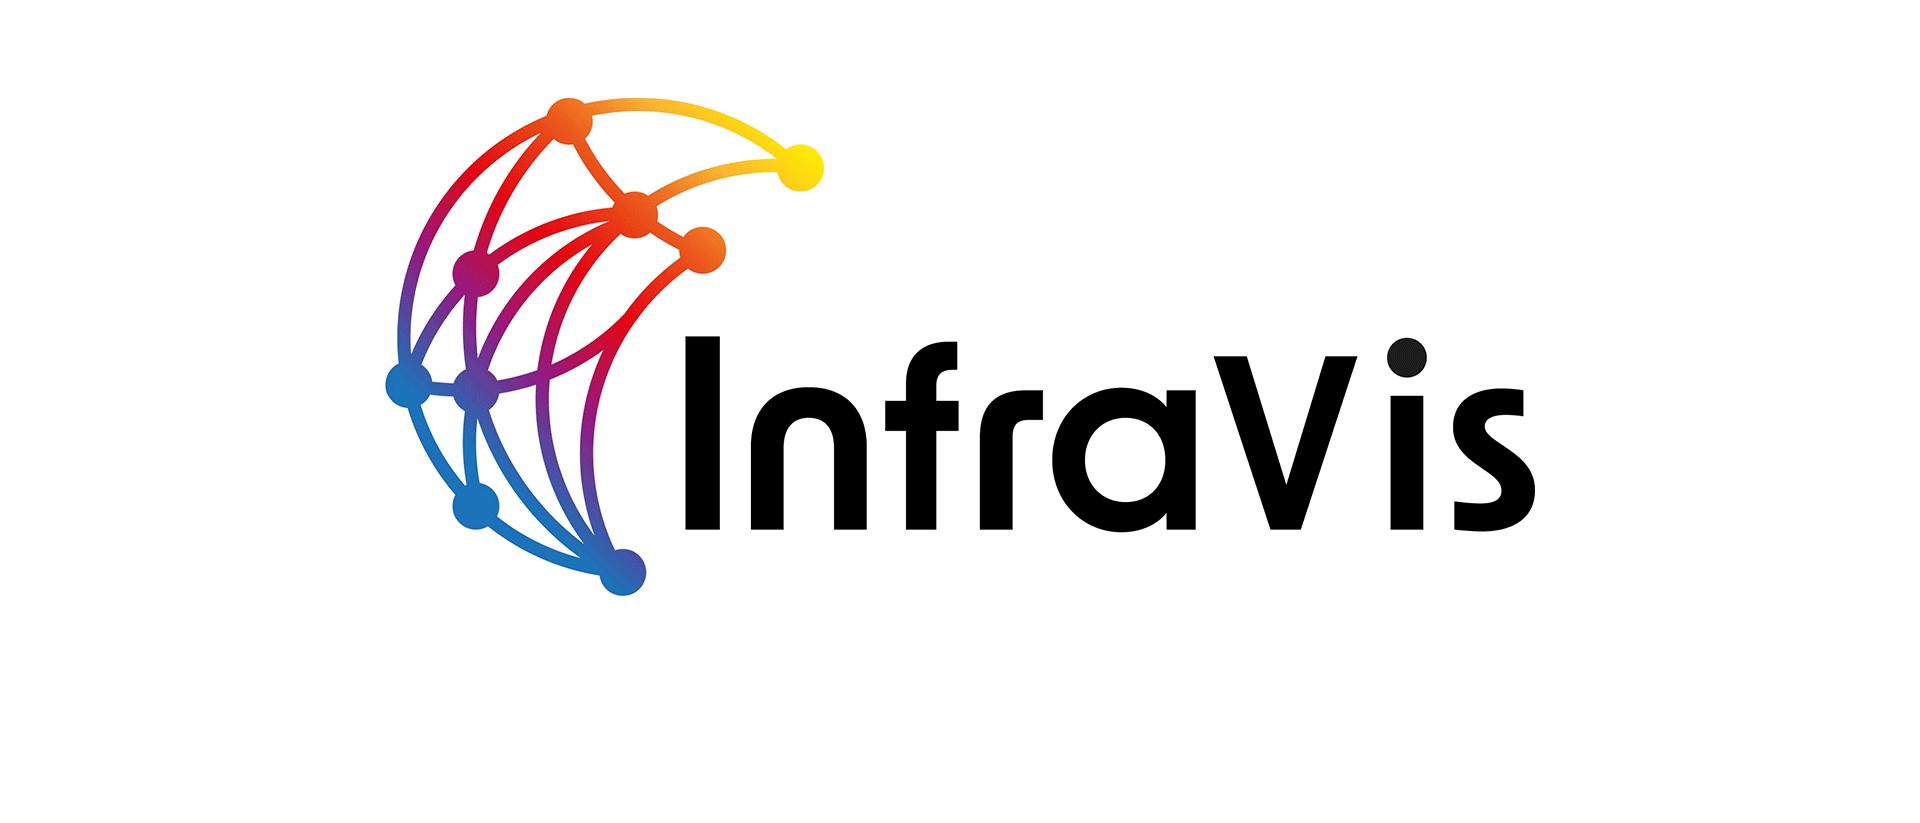 Infravis logo